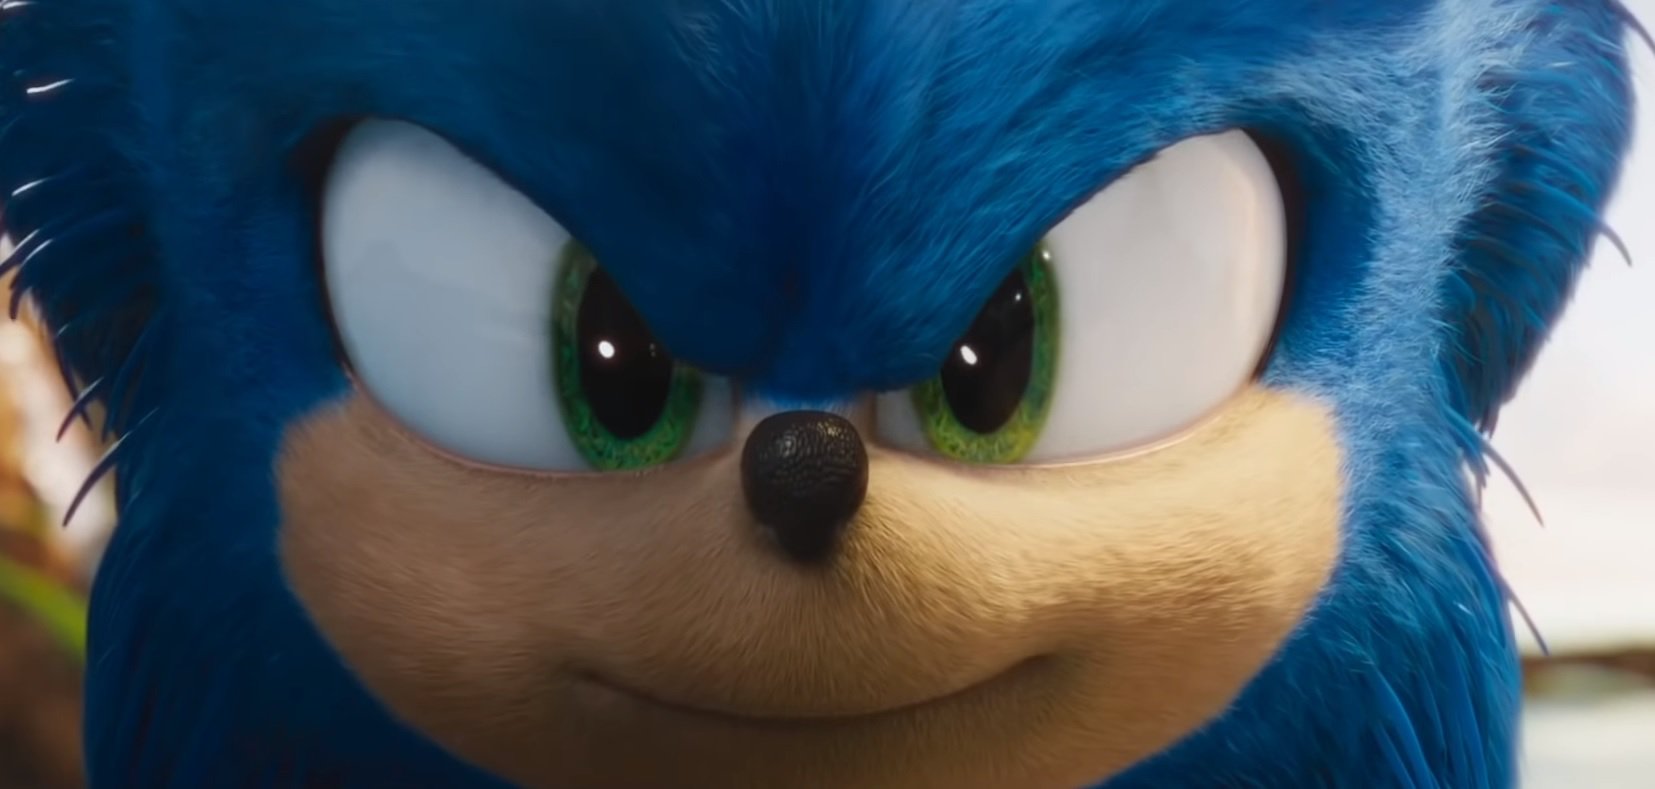 Sonic the hedgehog